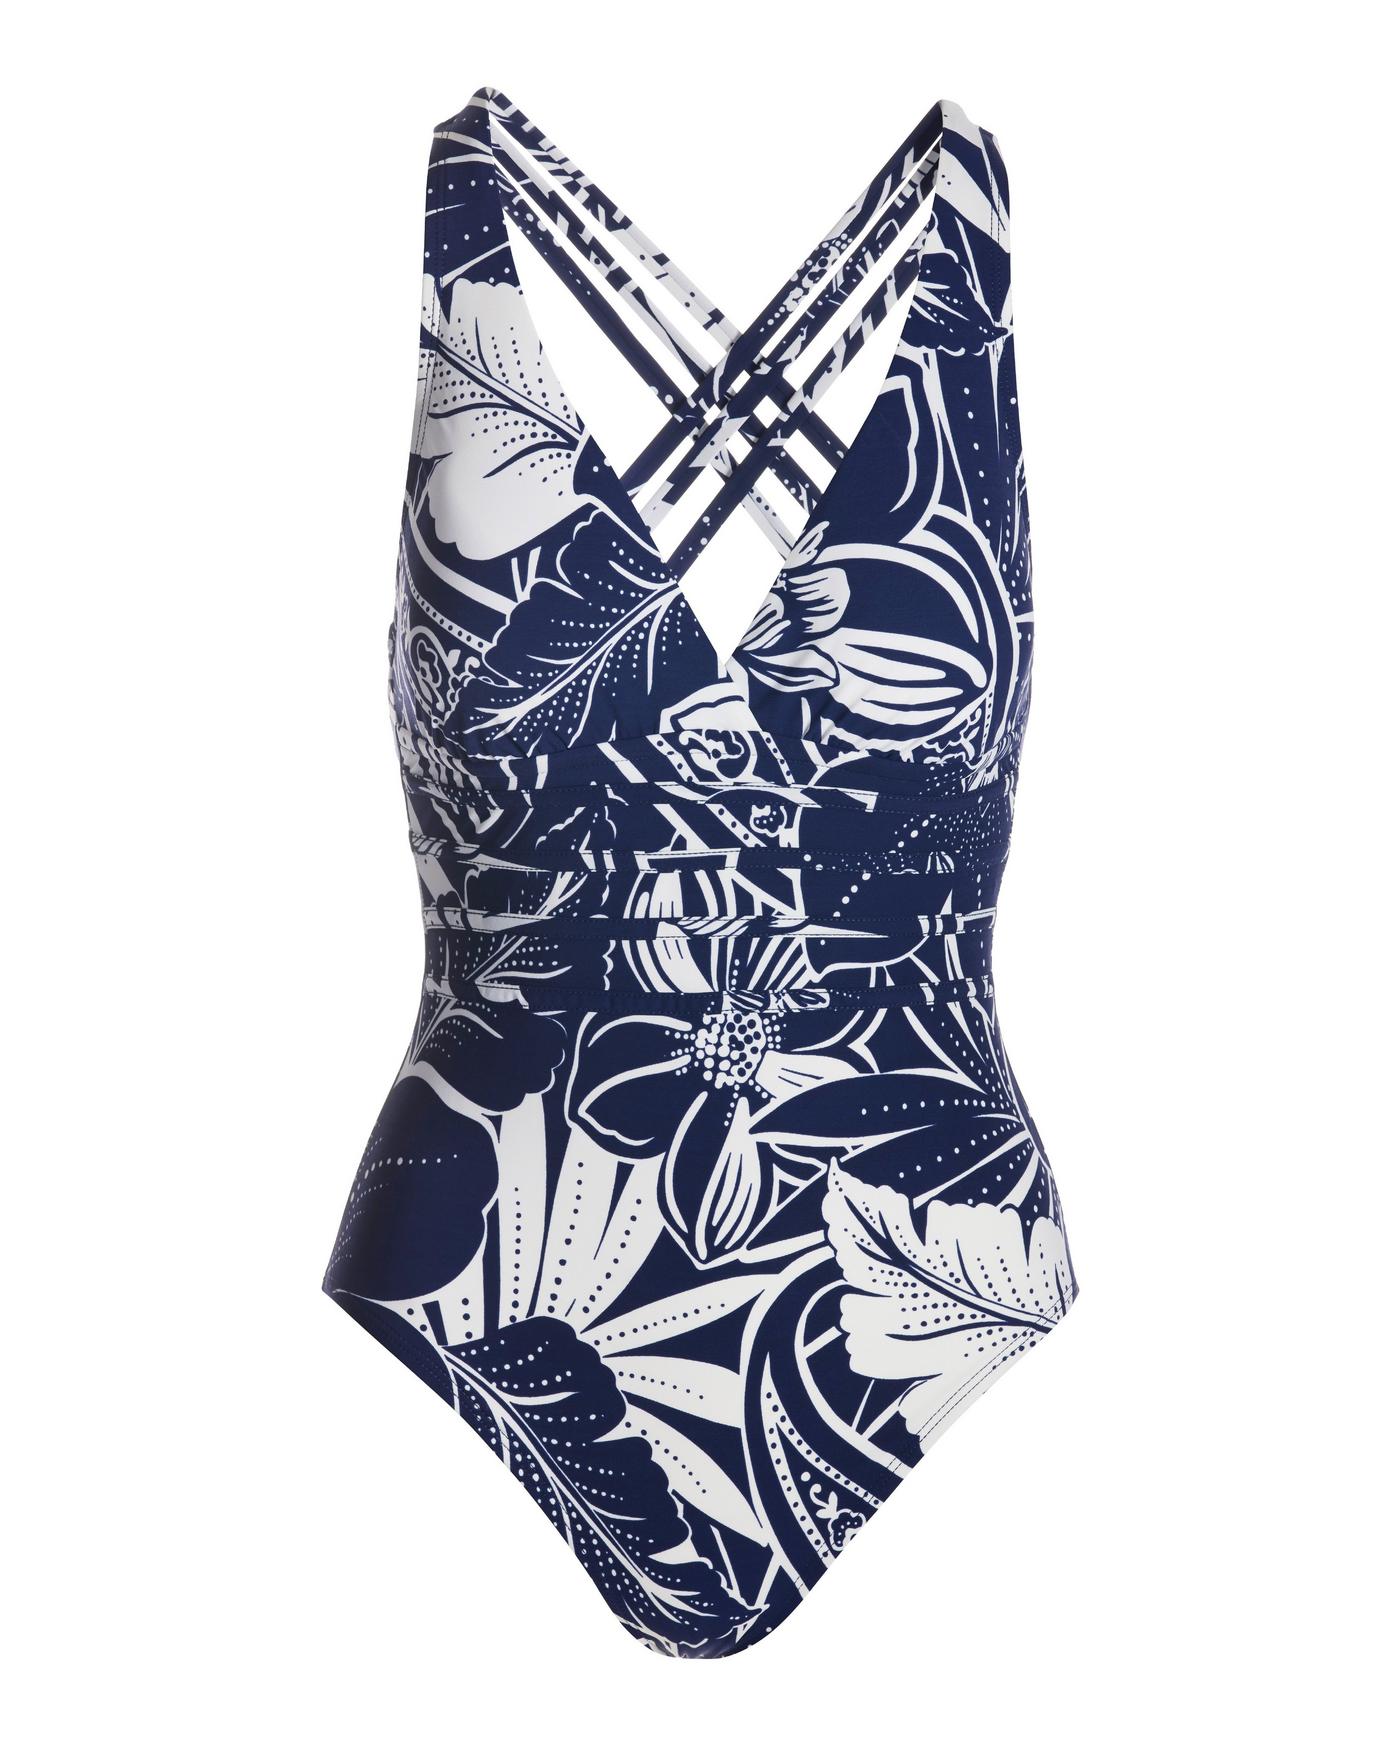 Swimsuit Monika / C3 - one-shoulder one-piece swimsuit with zebra